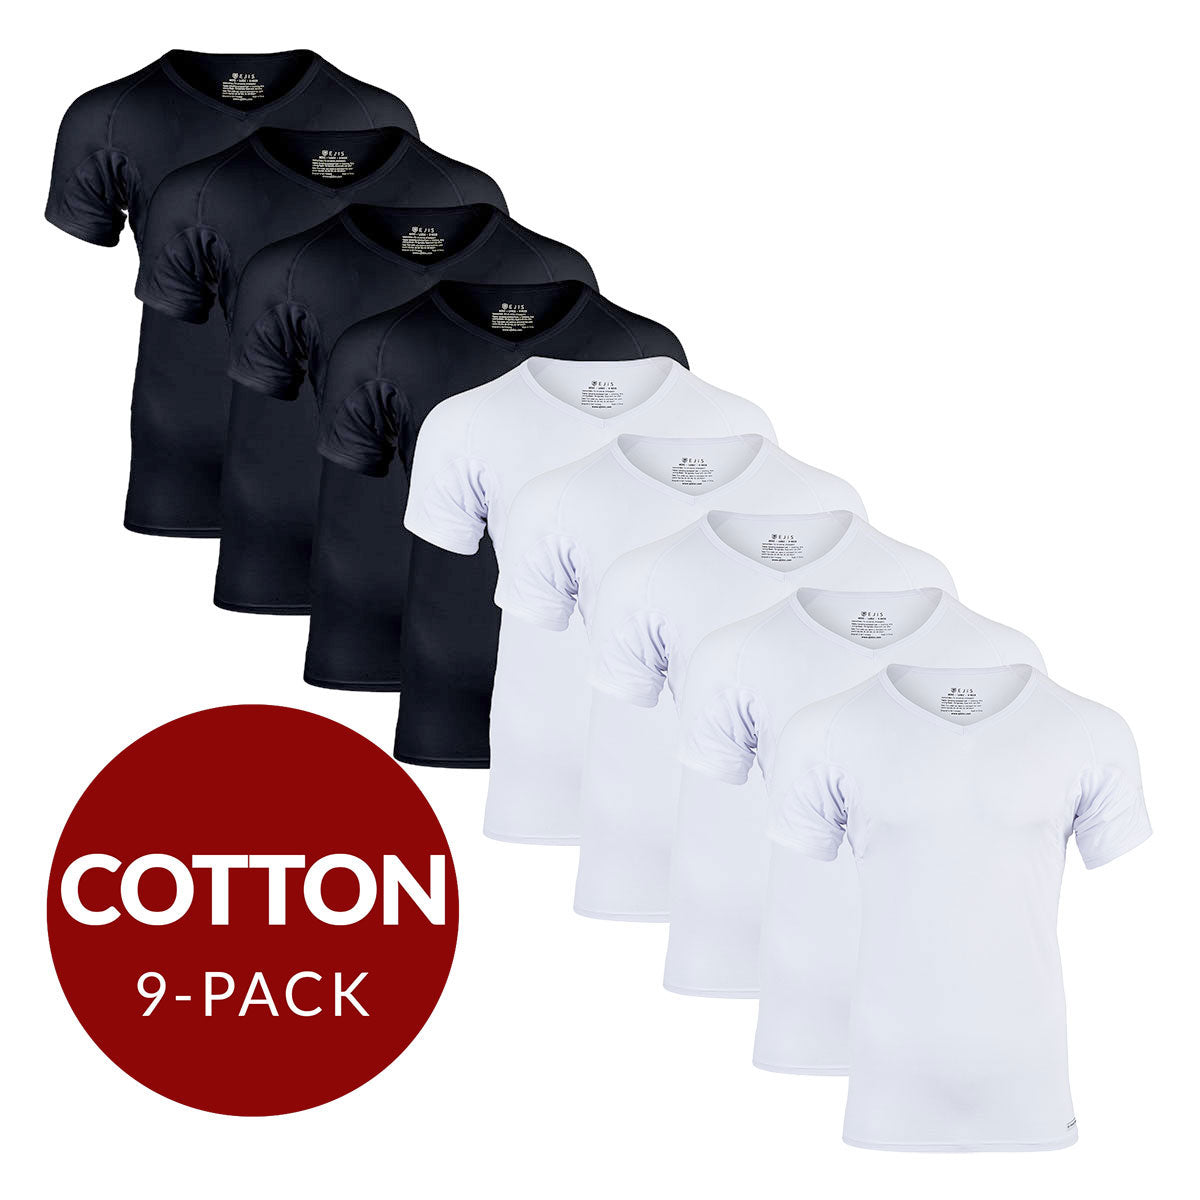 V-Neck Cotton Sweat Proof Undershirt For Men - Mix 9-Pack (5x White, 4x Black) - Ejis